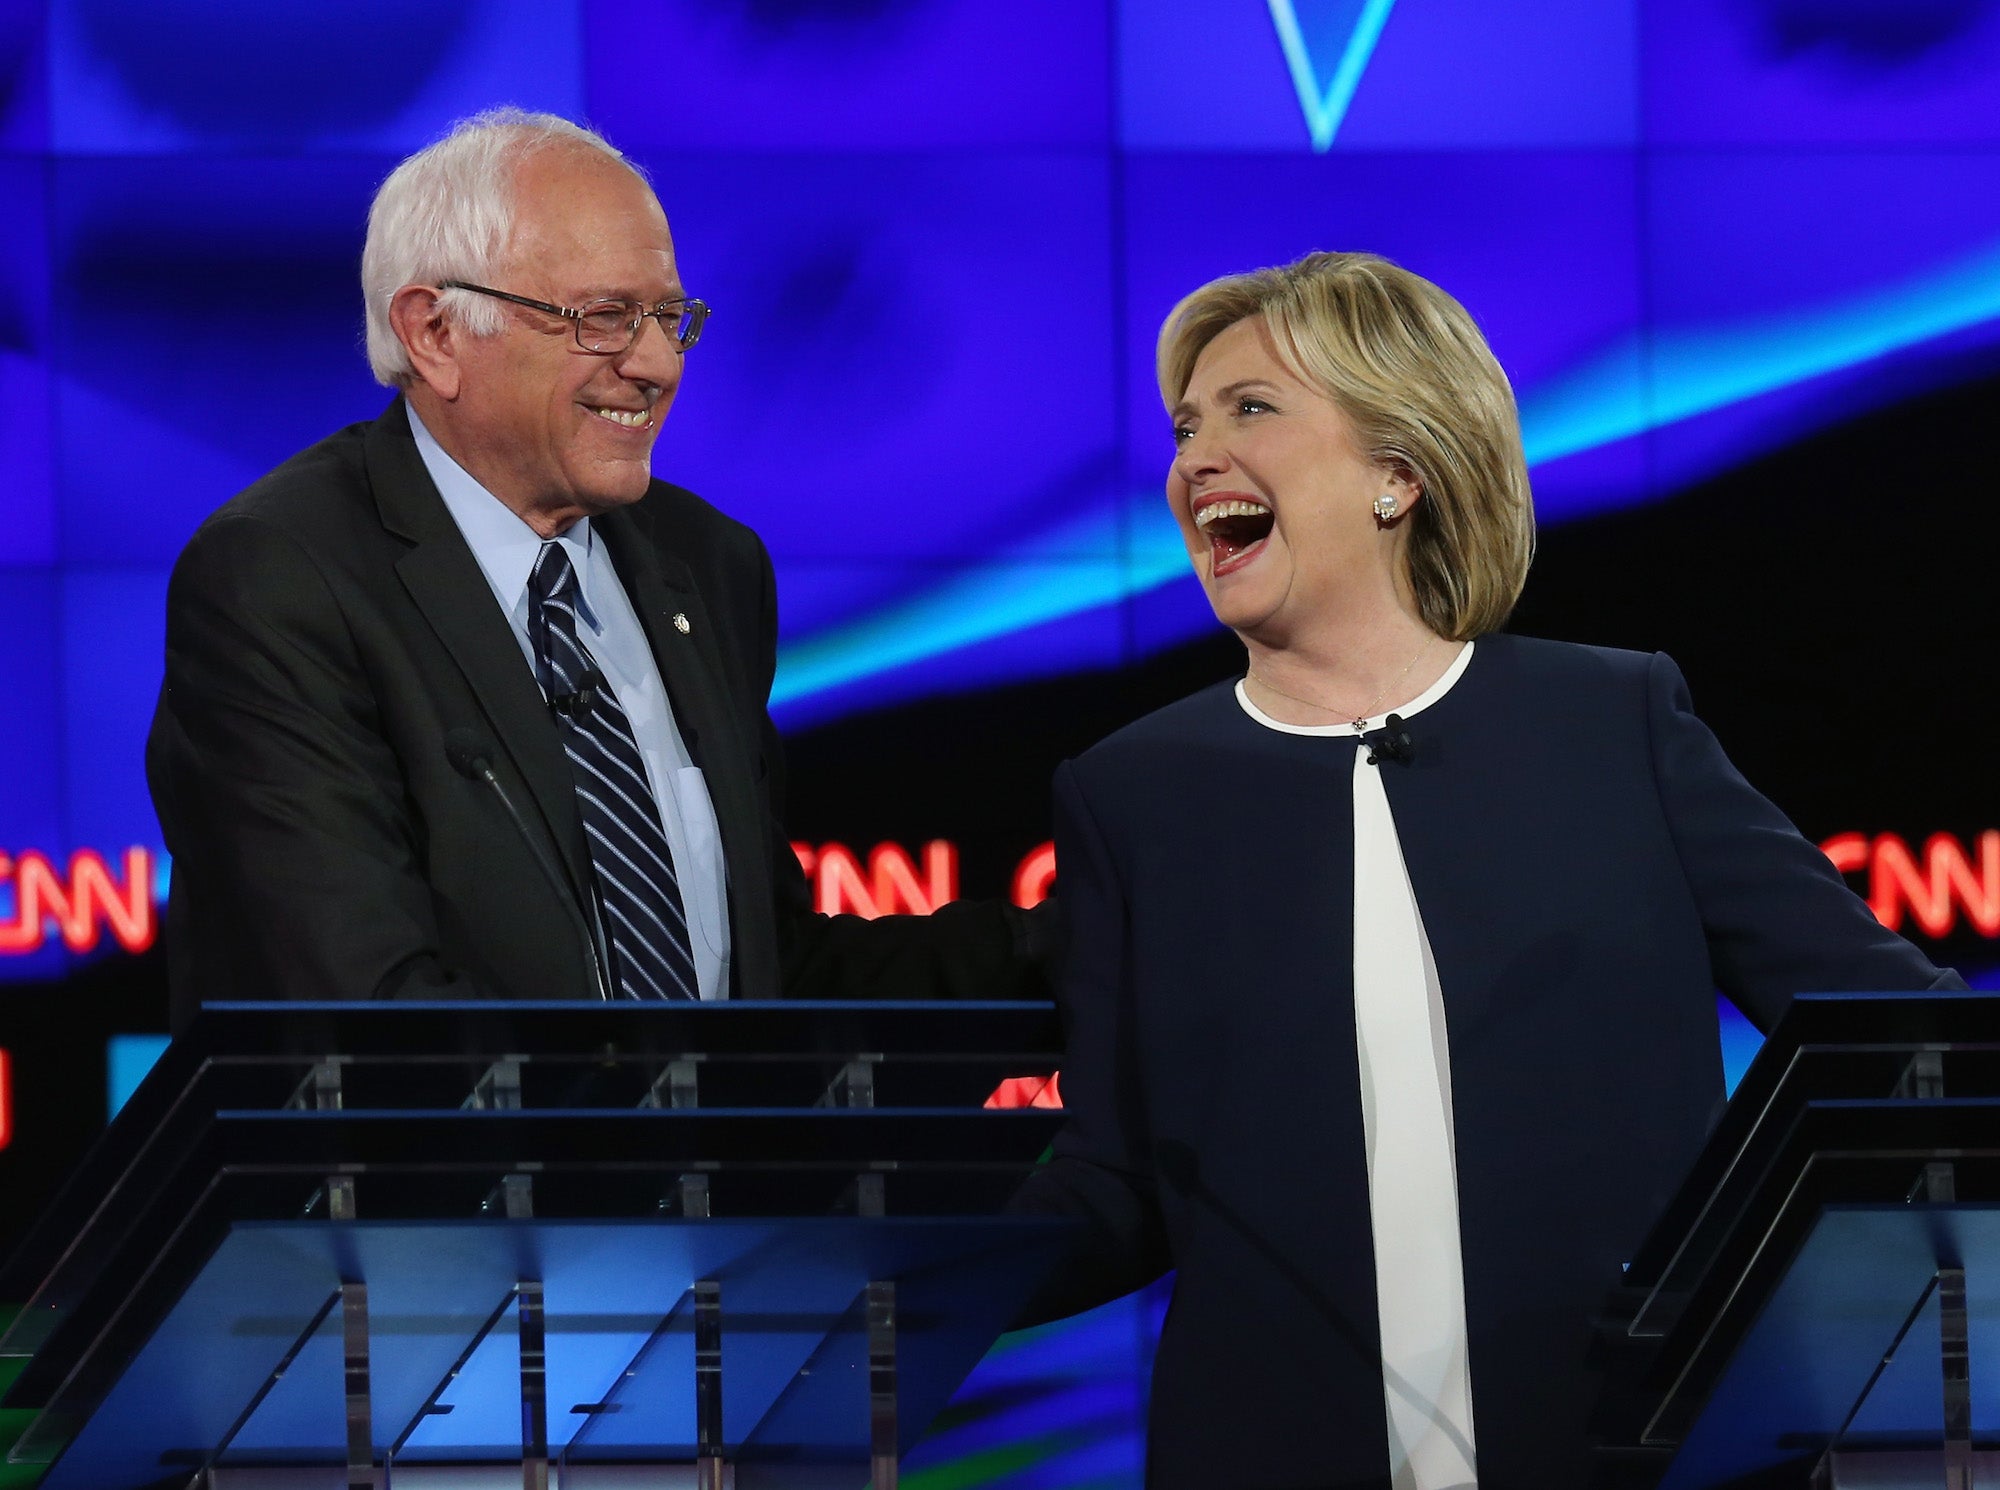 Bernie Sanders and Hillary Clinton looking like BFFs.